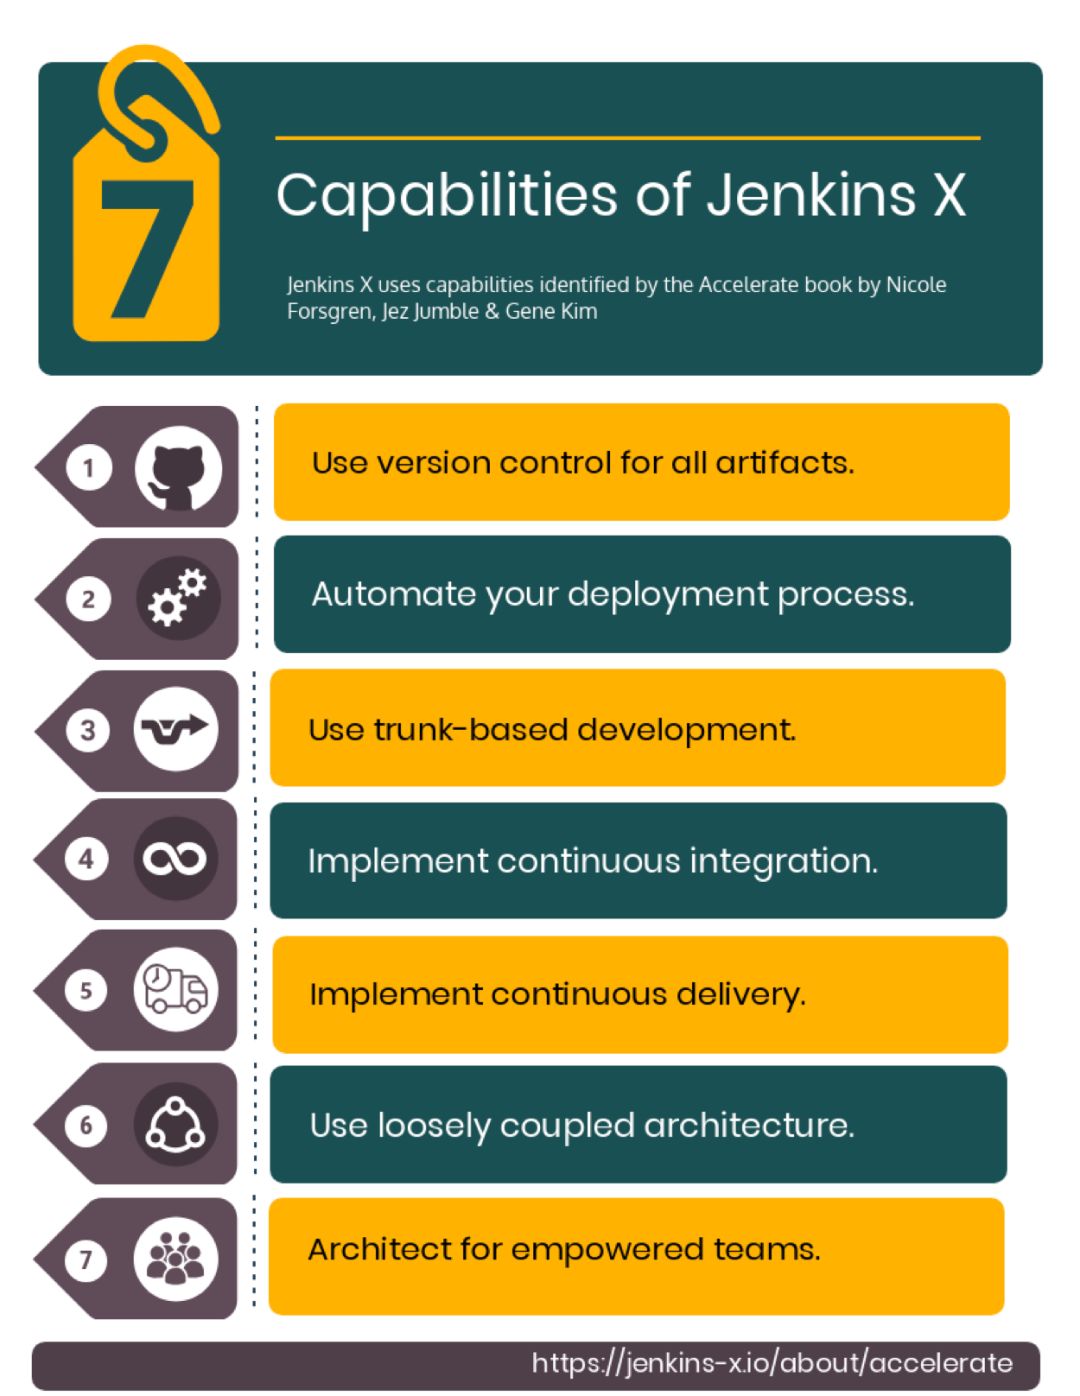 Jenkins X 加速 DevOps 能力提升 